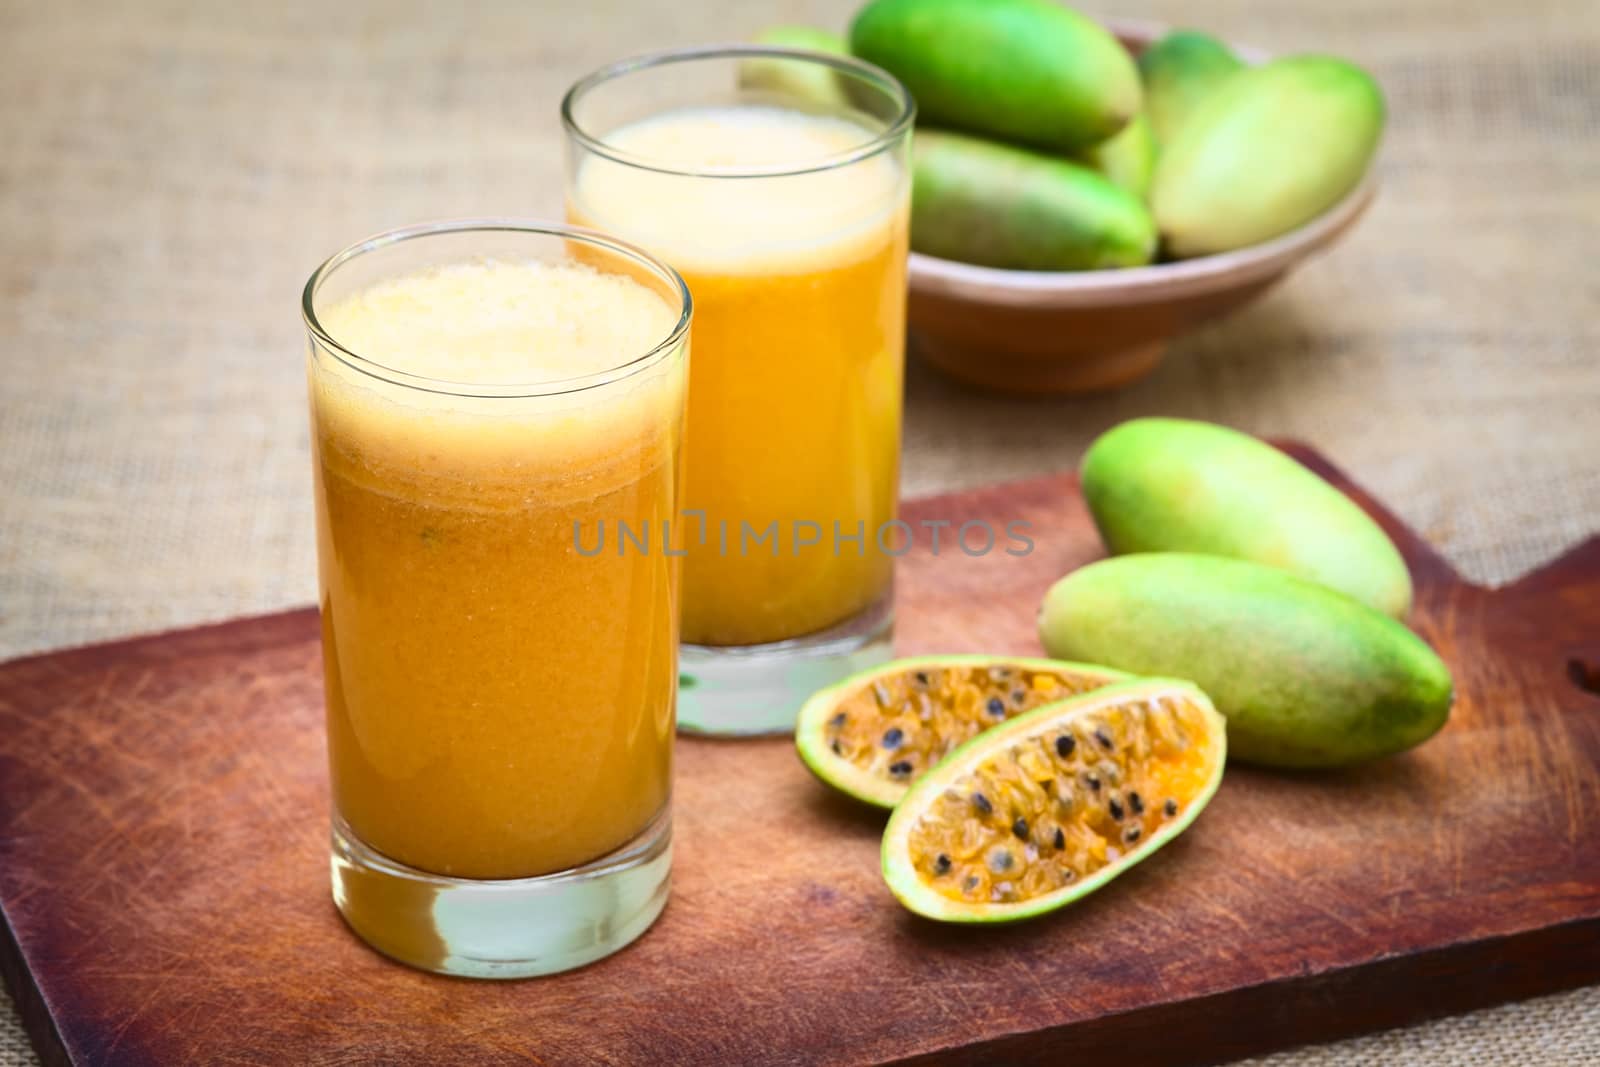 Fresh Juice Made of Banana Passionfruit (lat. Passiflora Tripartita) by ildi